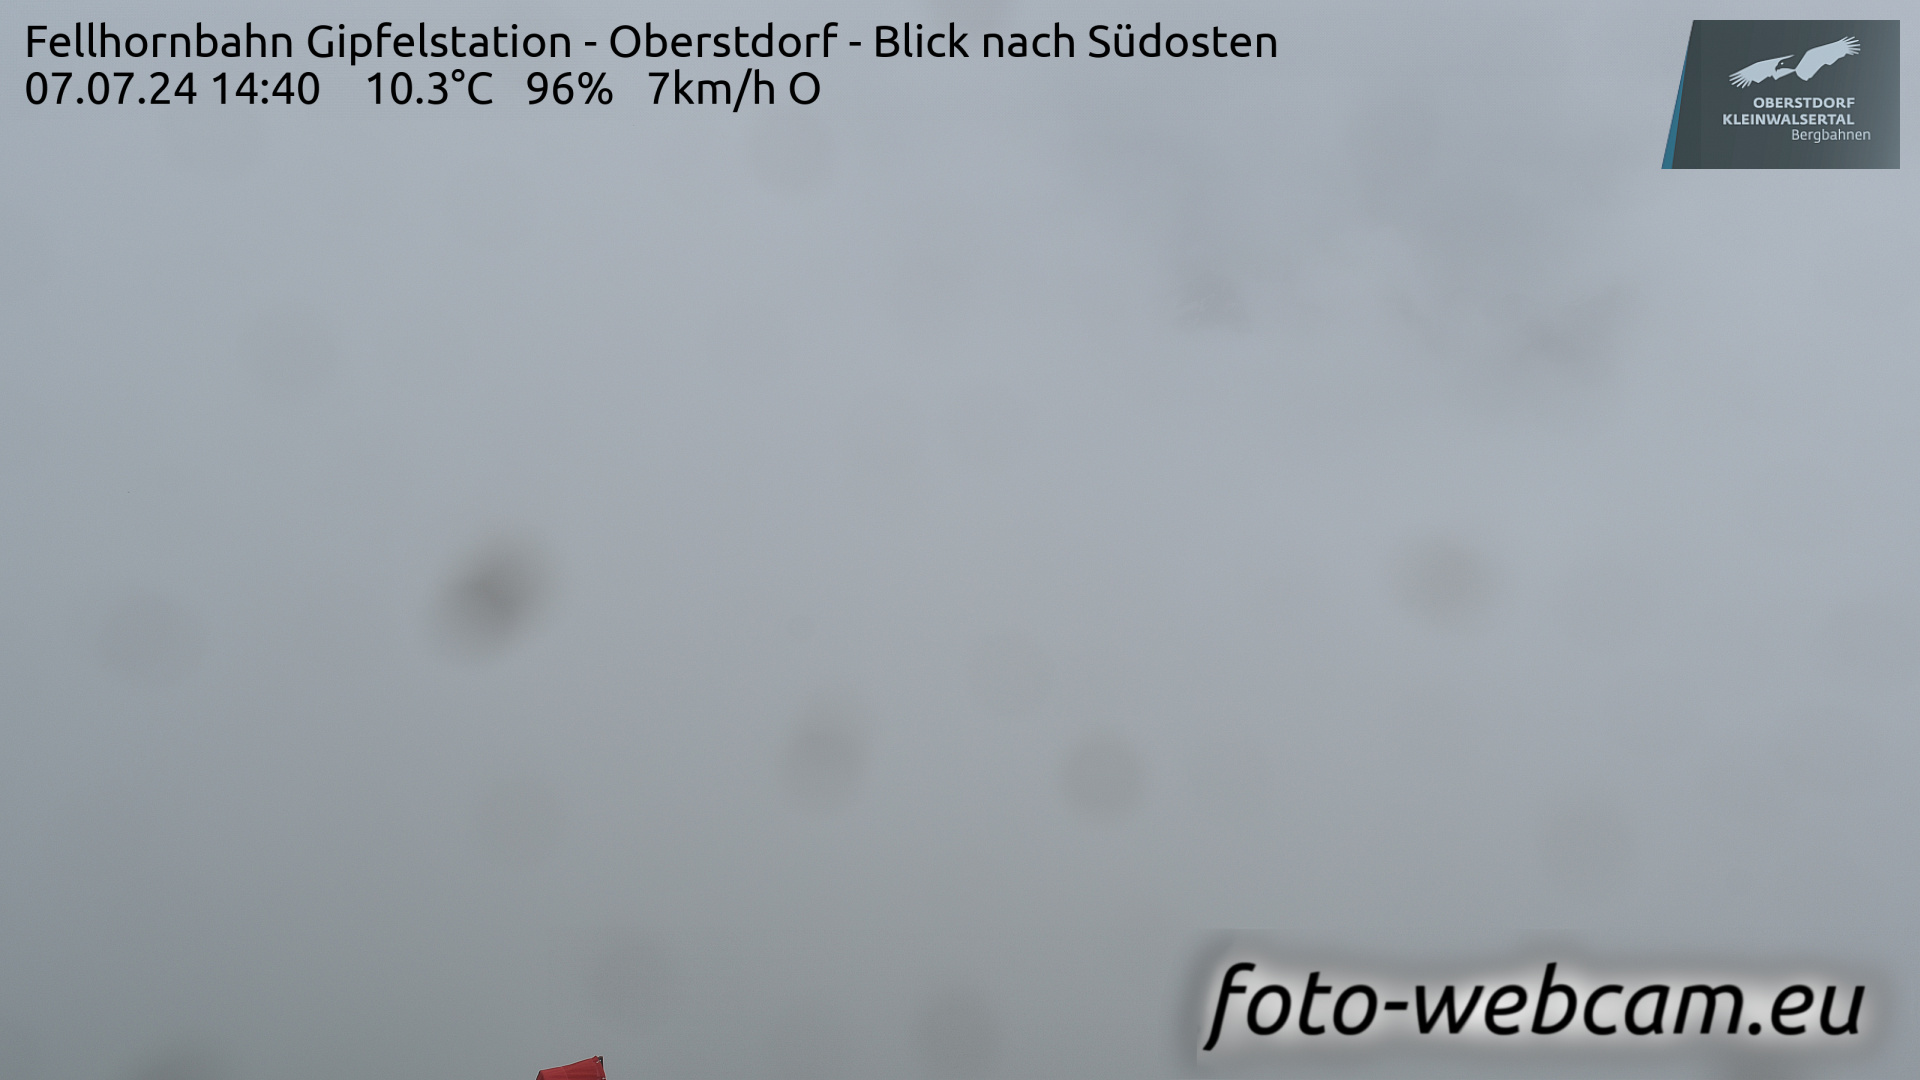 Oberstdorf Wed. 14:49